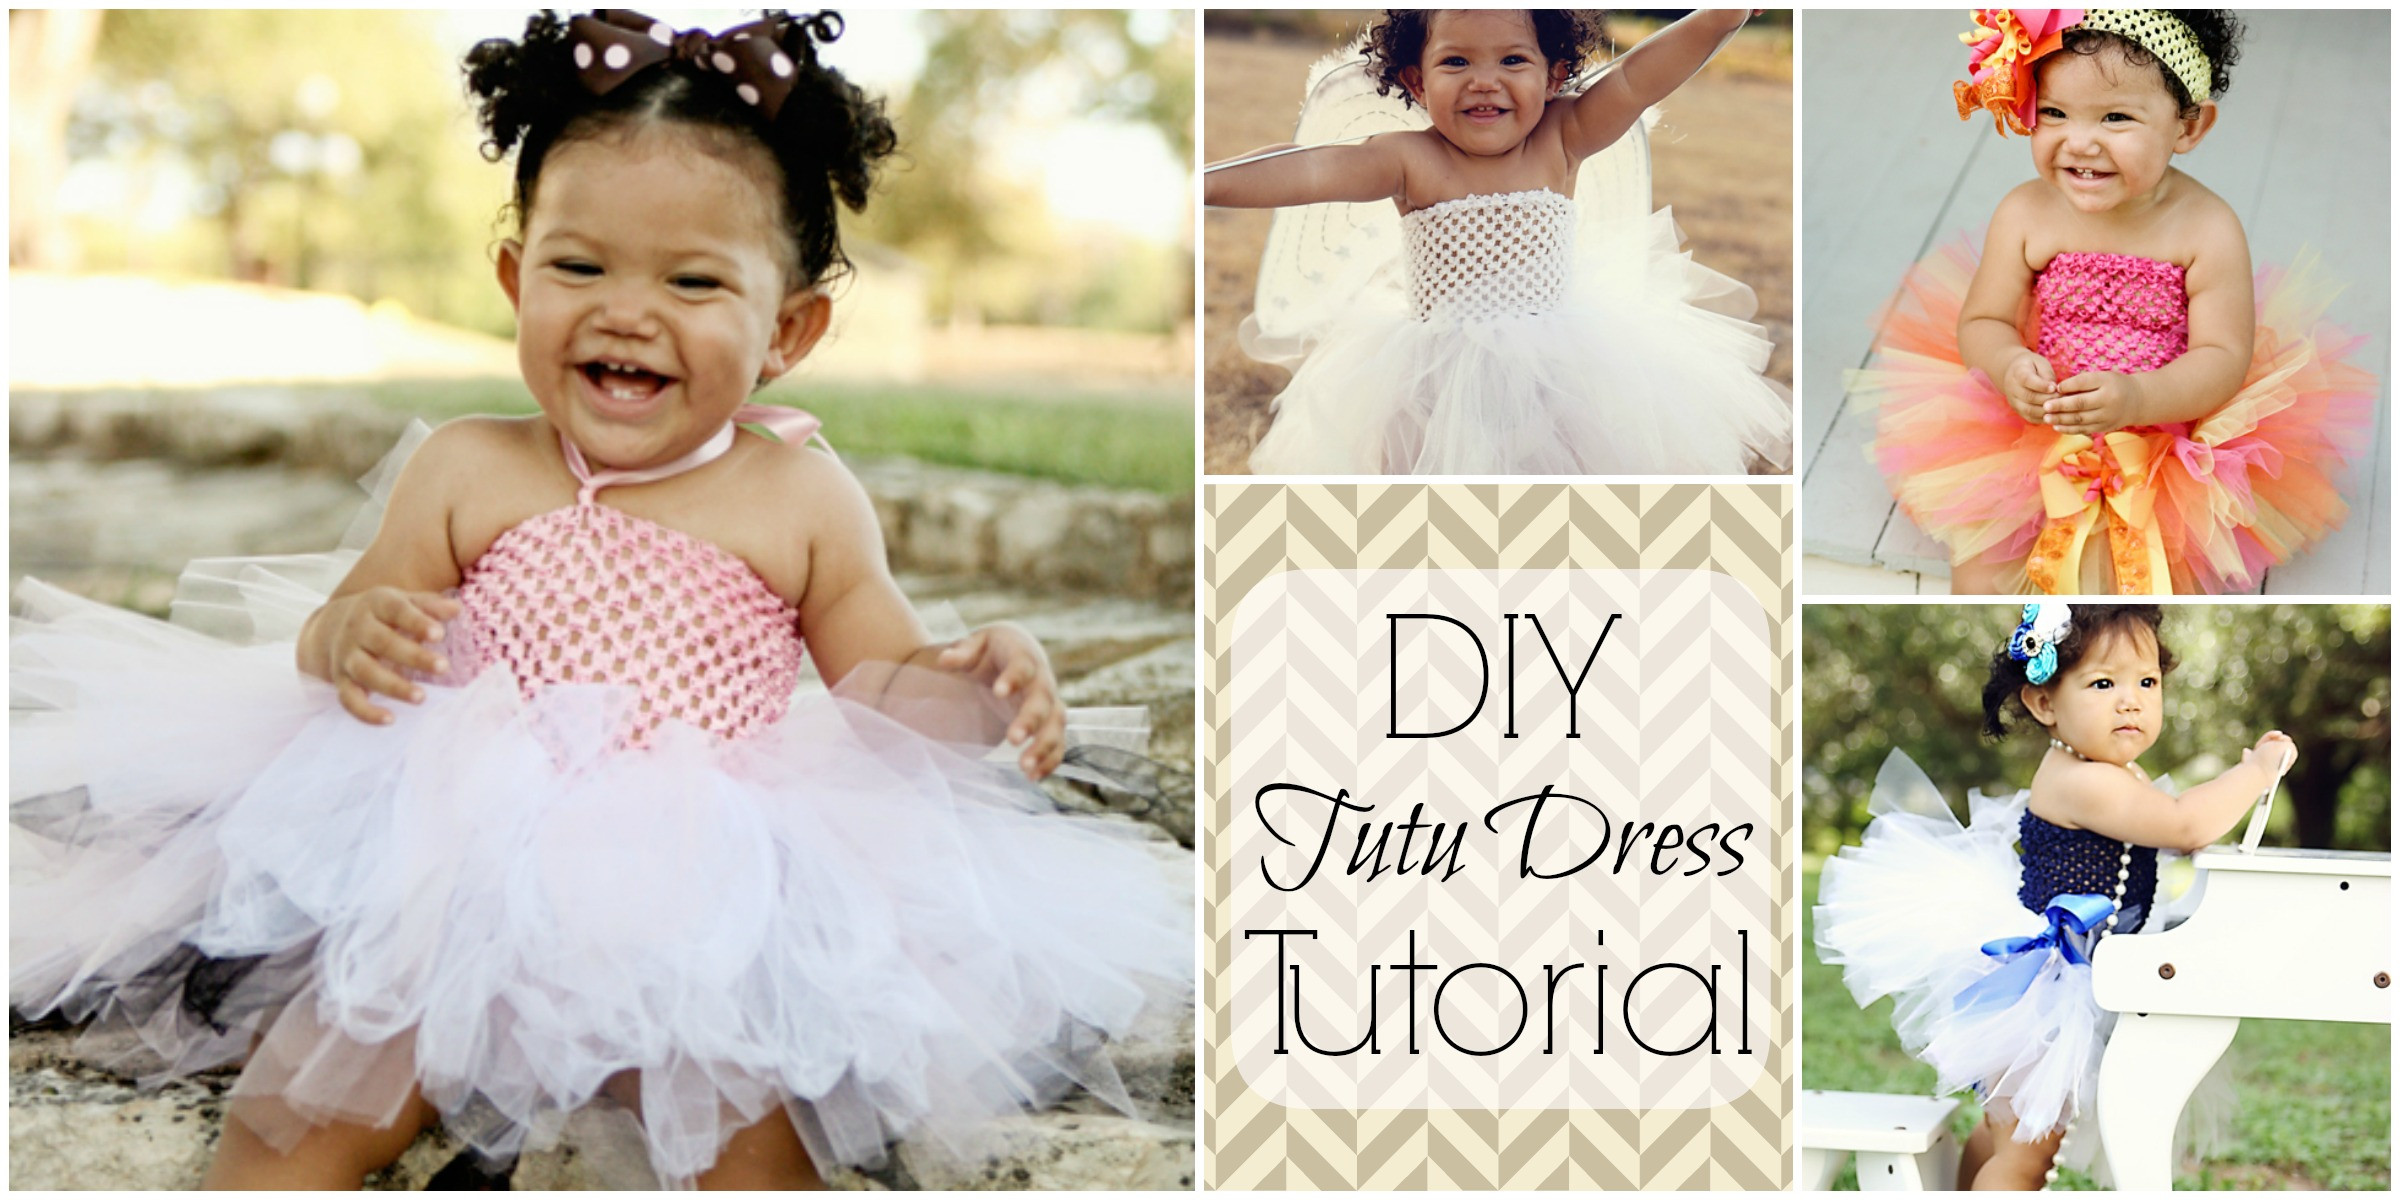 DIY Tutu Dress For Toddler
 How to make a tutu dress without sewing